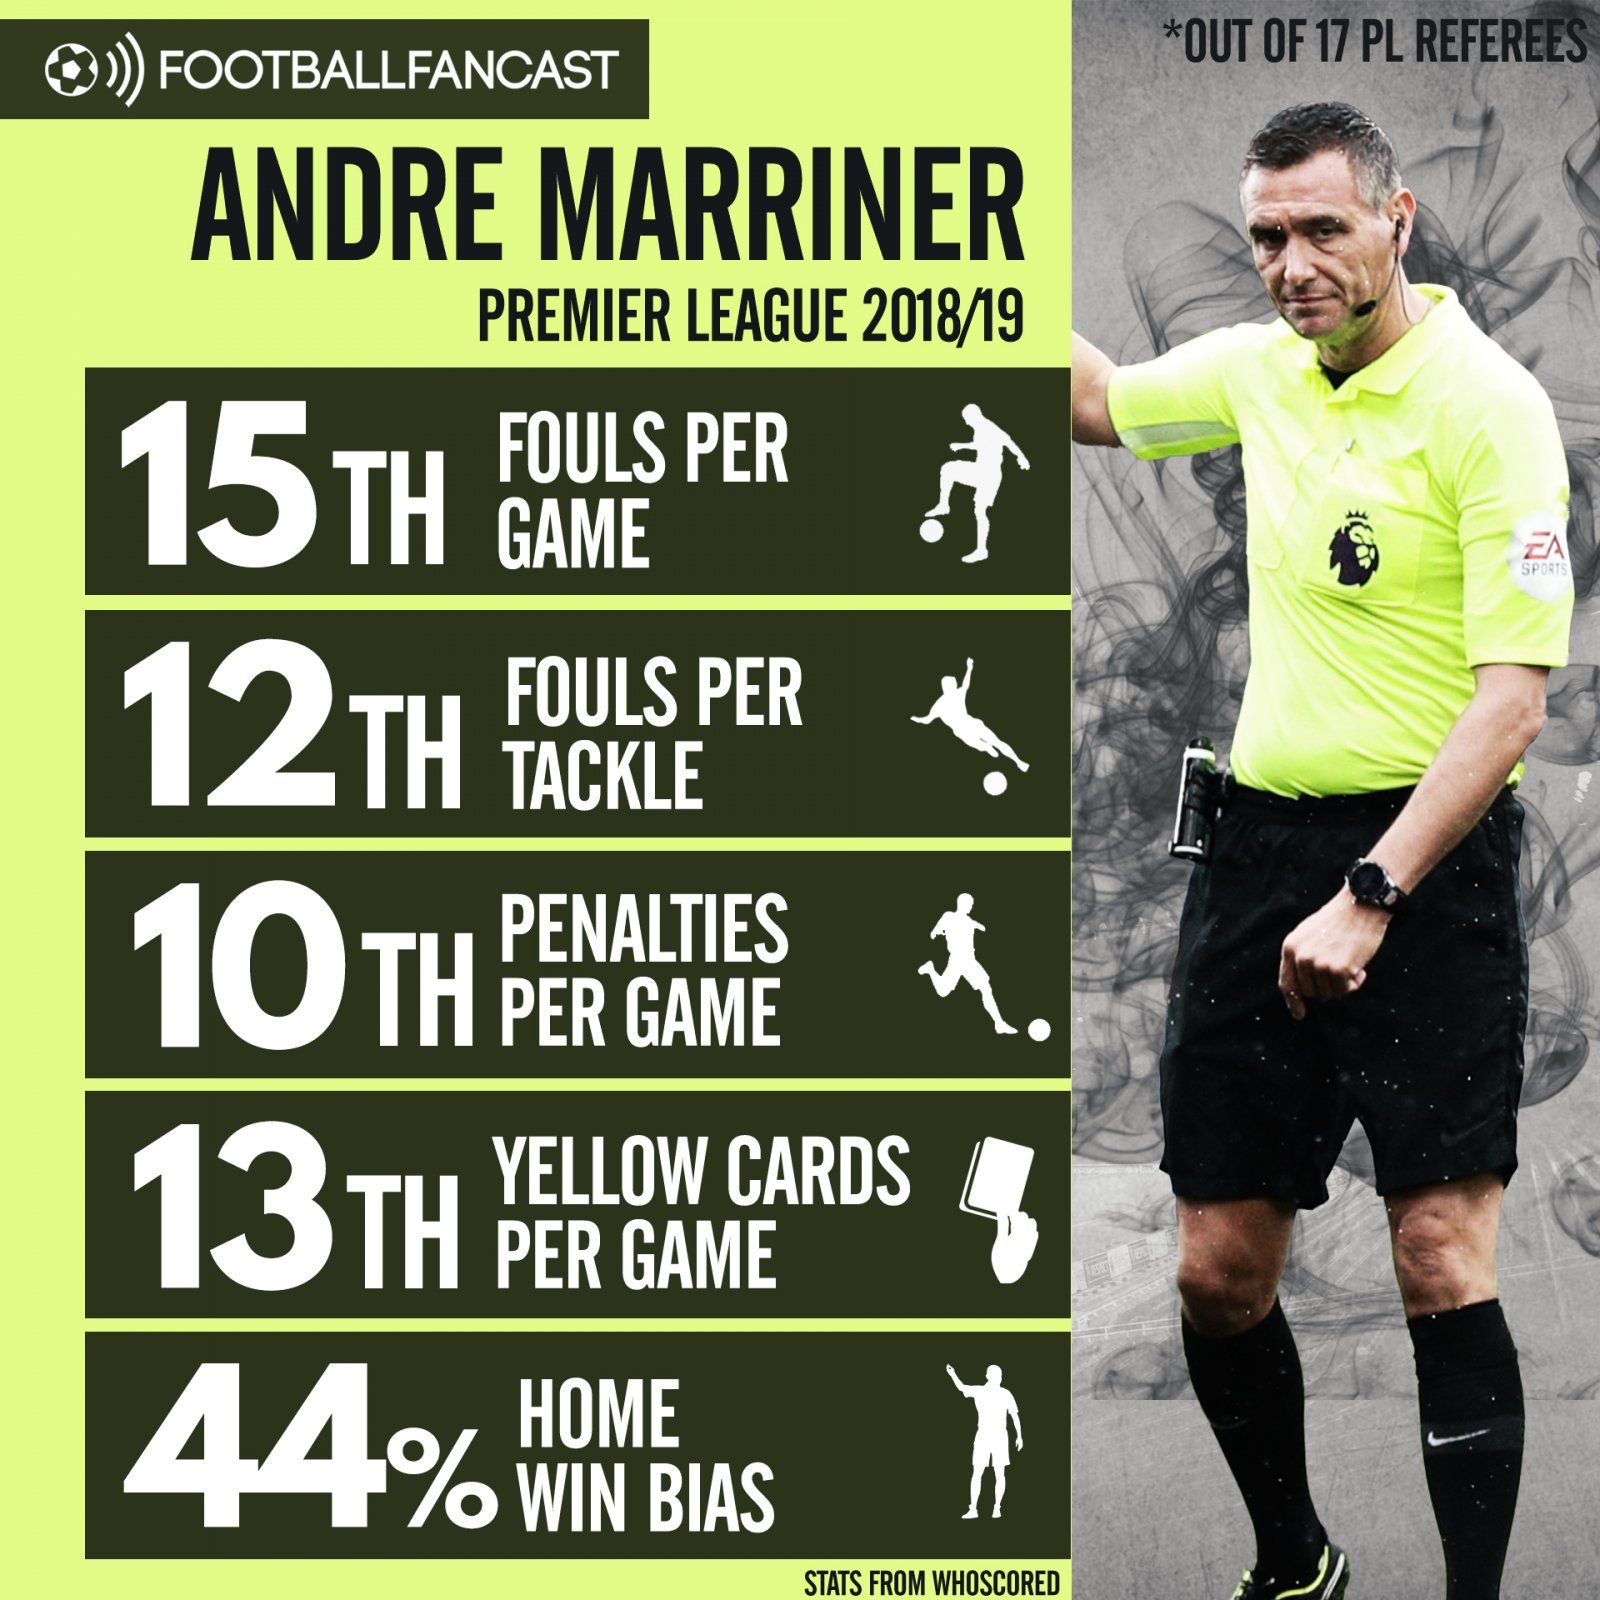 Andre Marriner's referee statistics this season